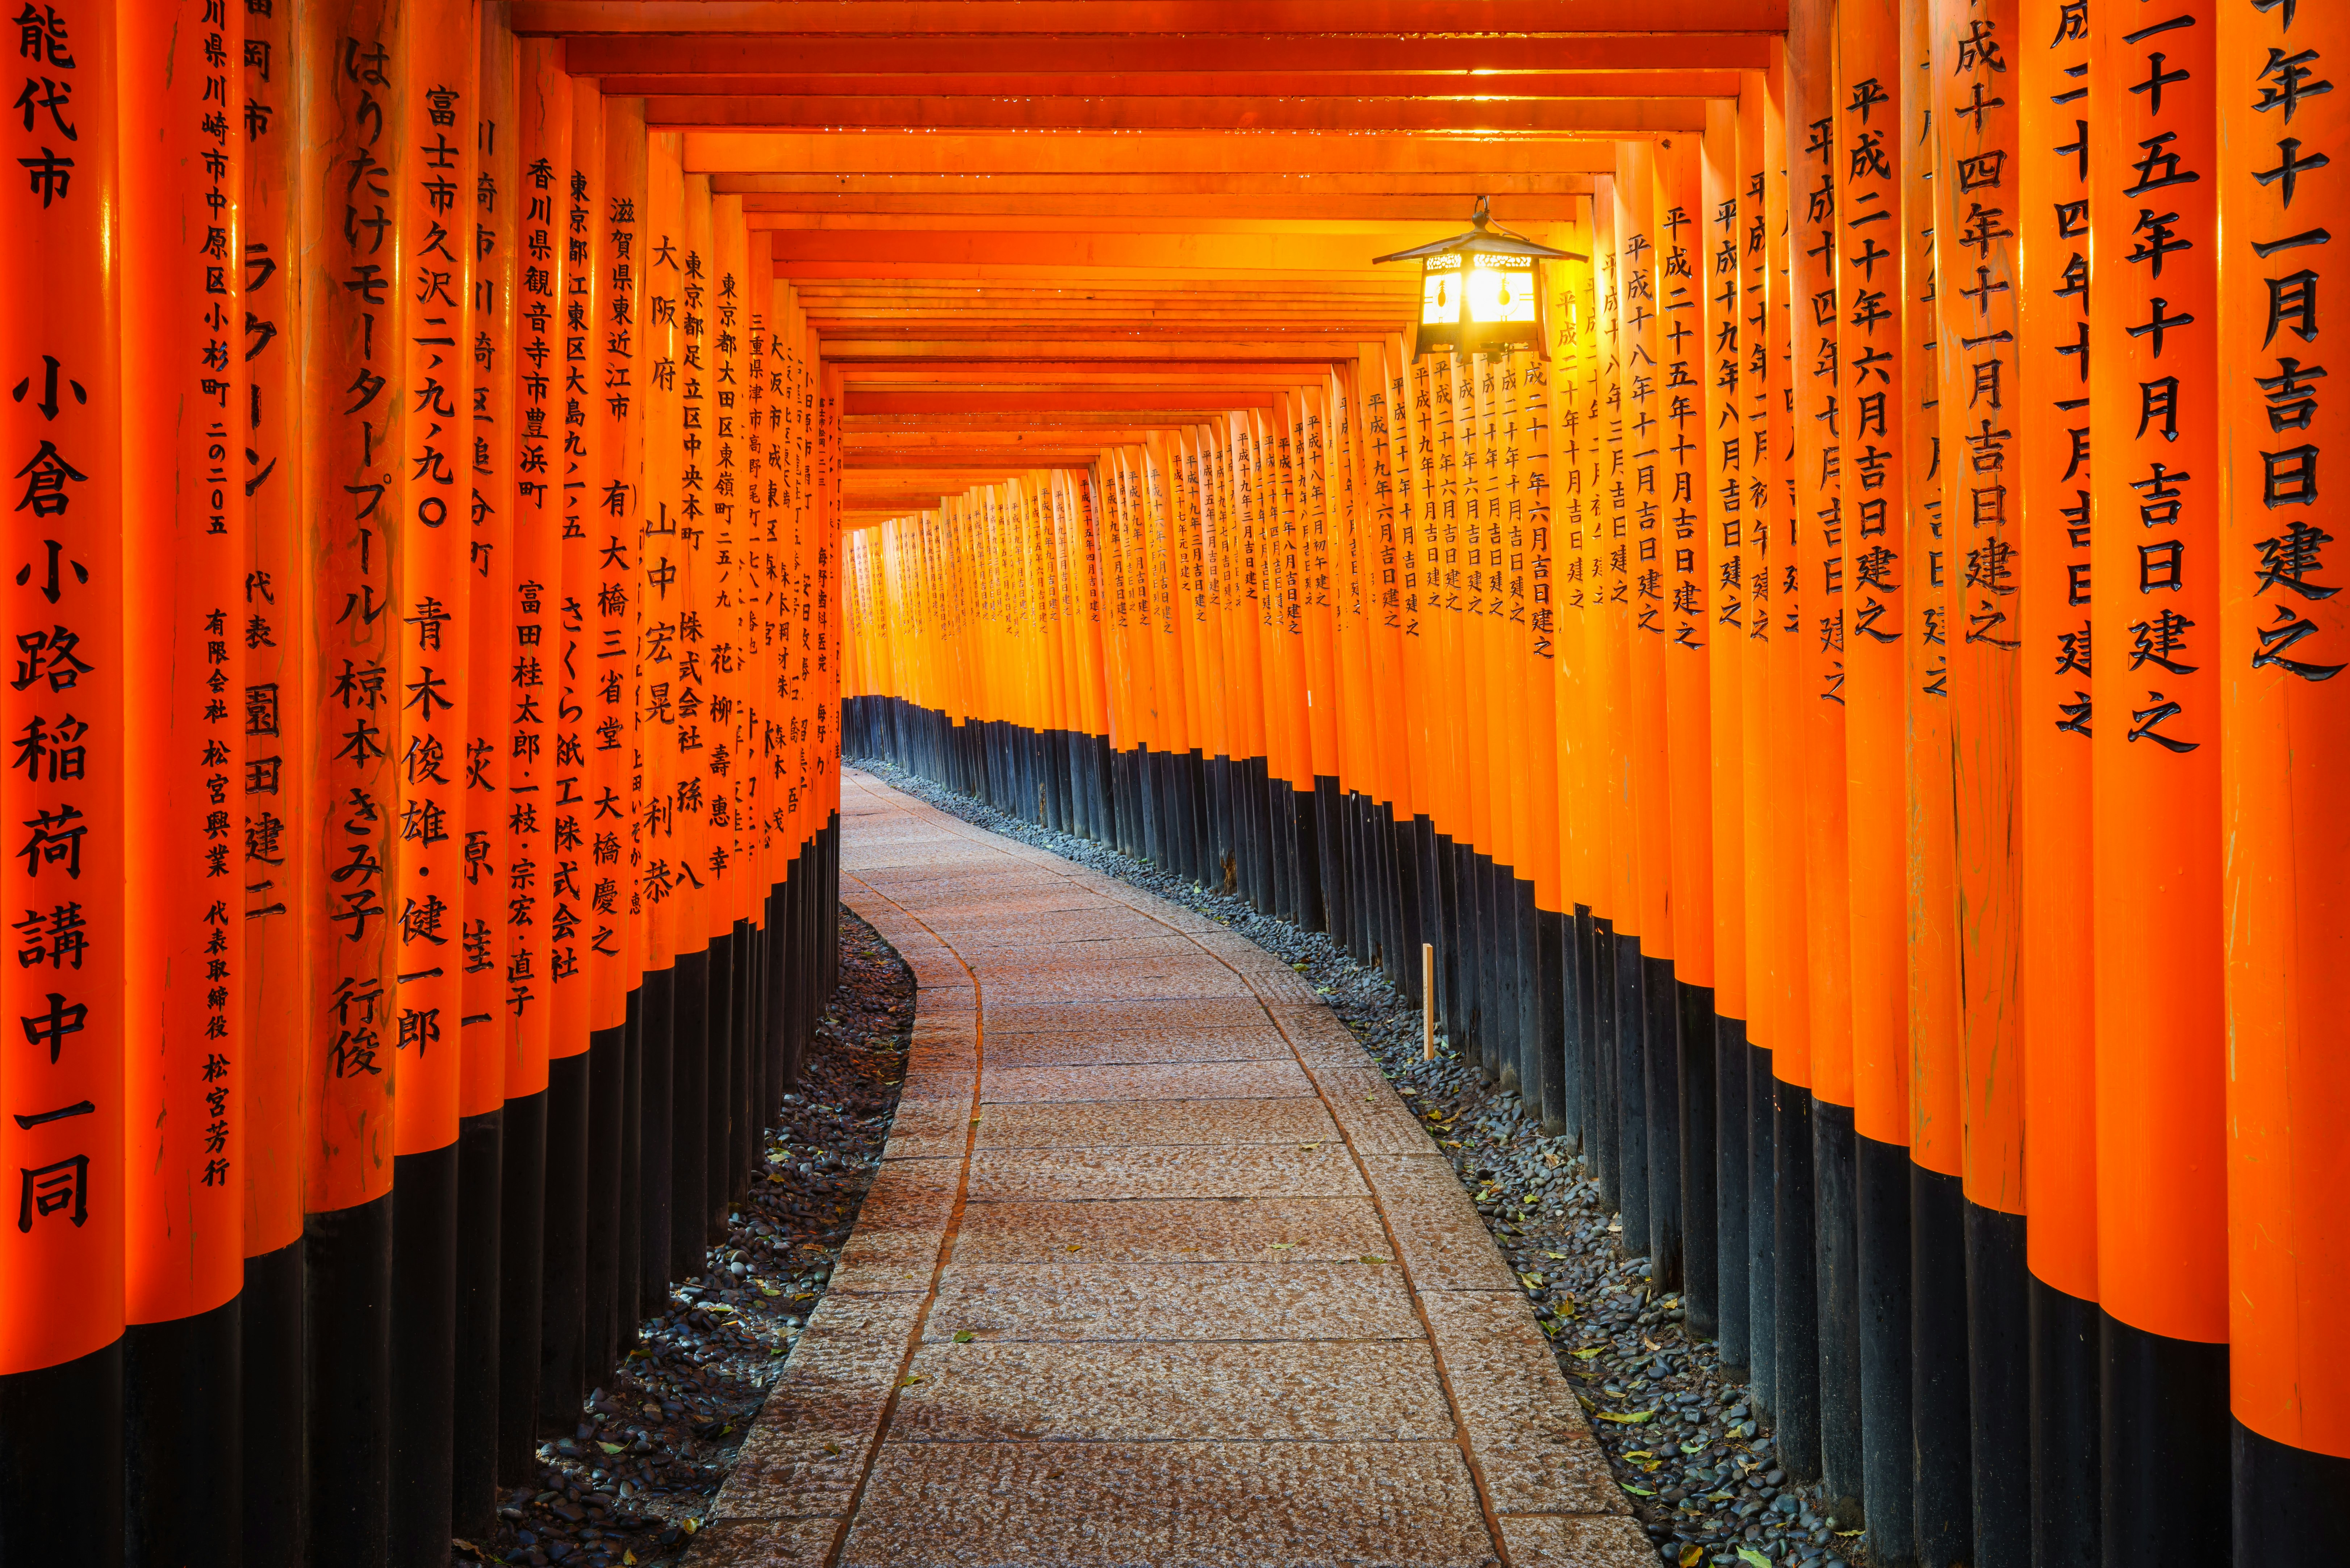 Orange Torii gates in Fushimi Inari Shrine, Kyoto, Japan.